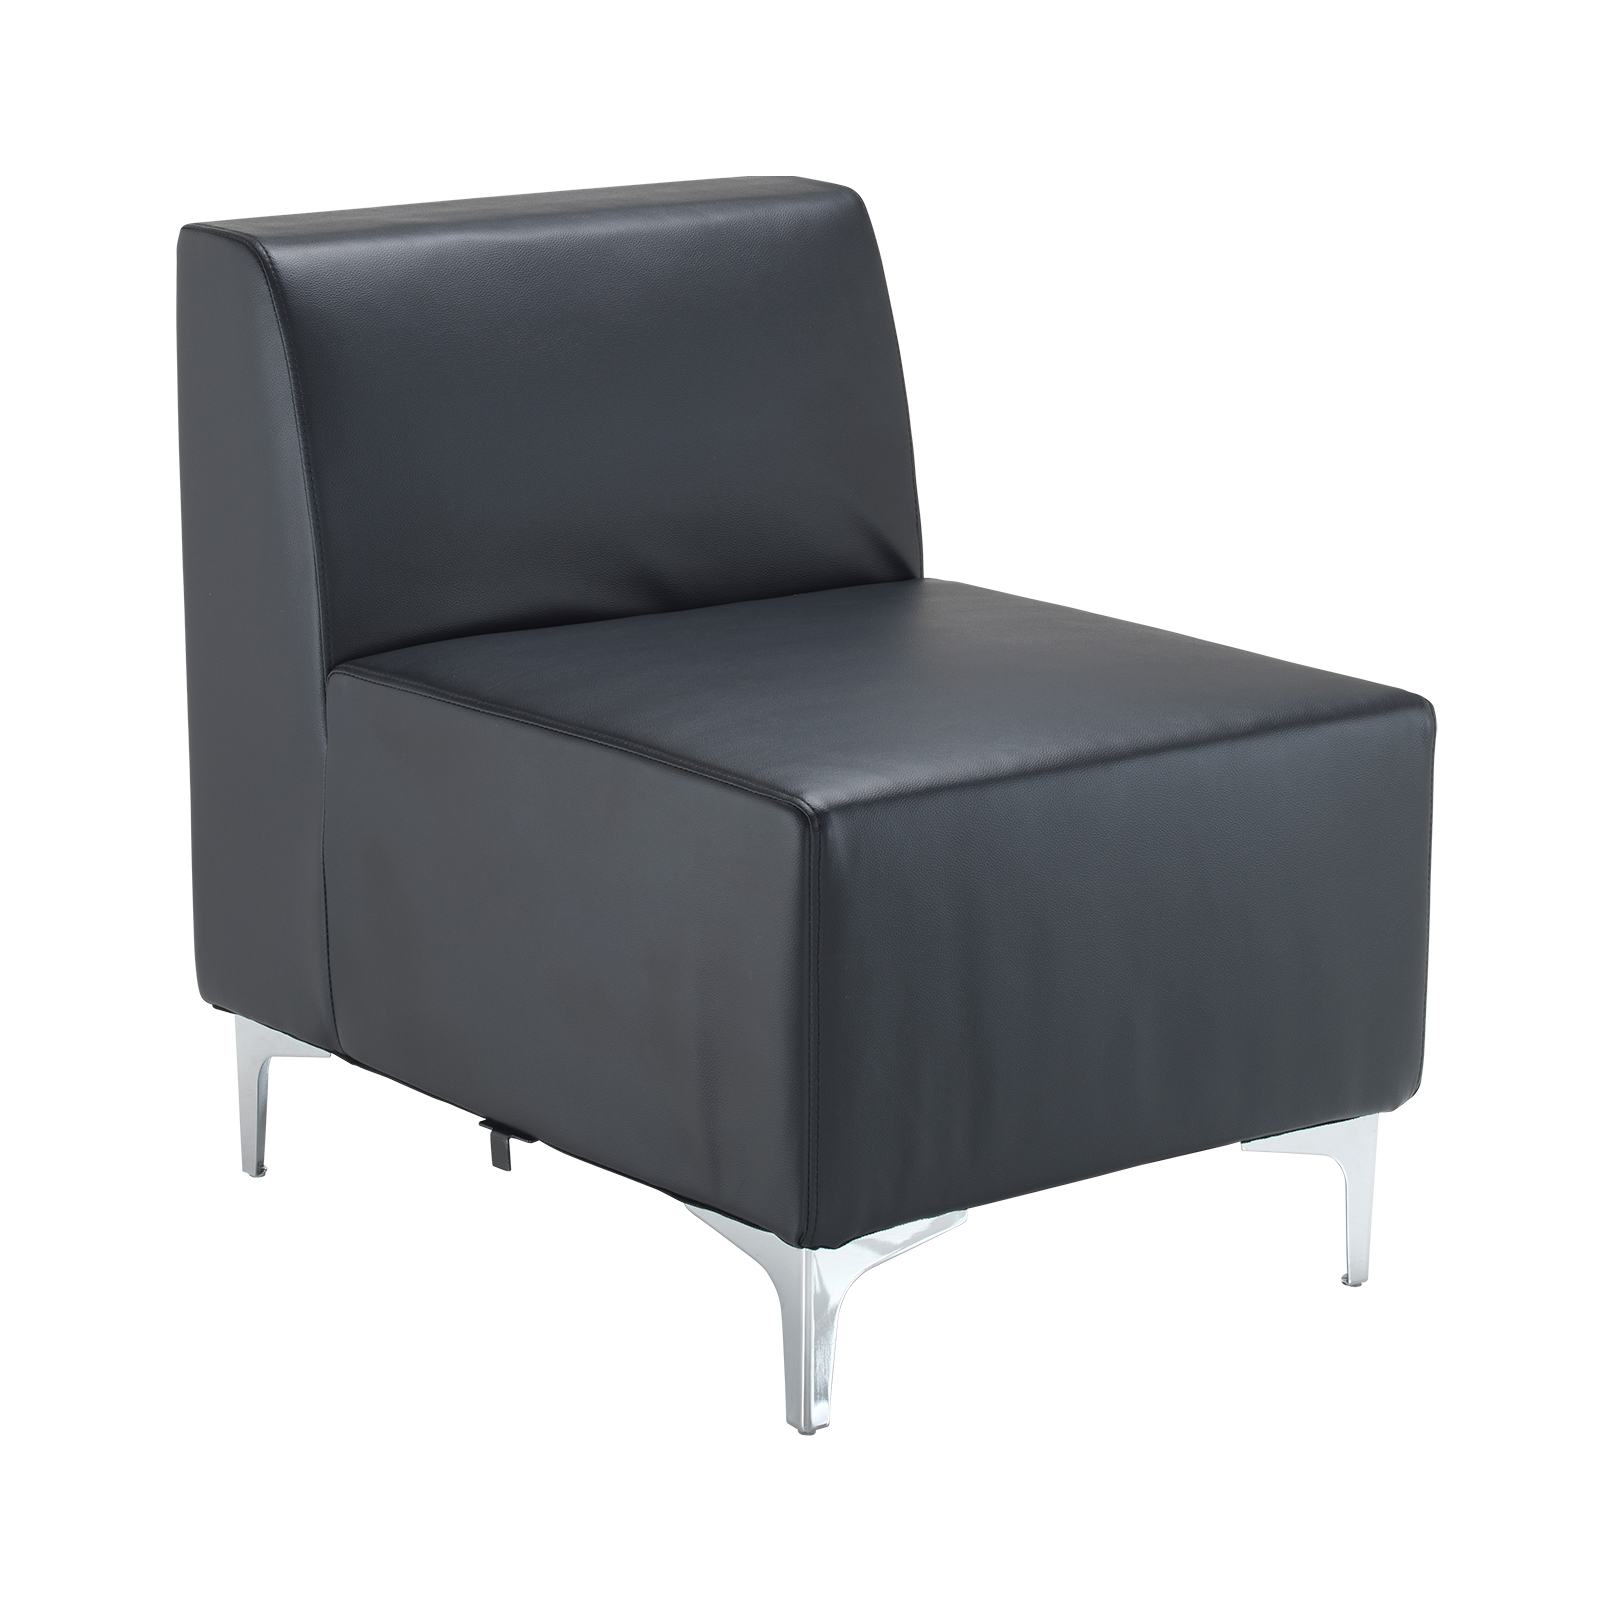 Quatro leather modular reception seating straight unit with back - black